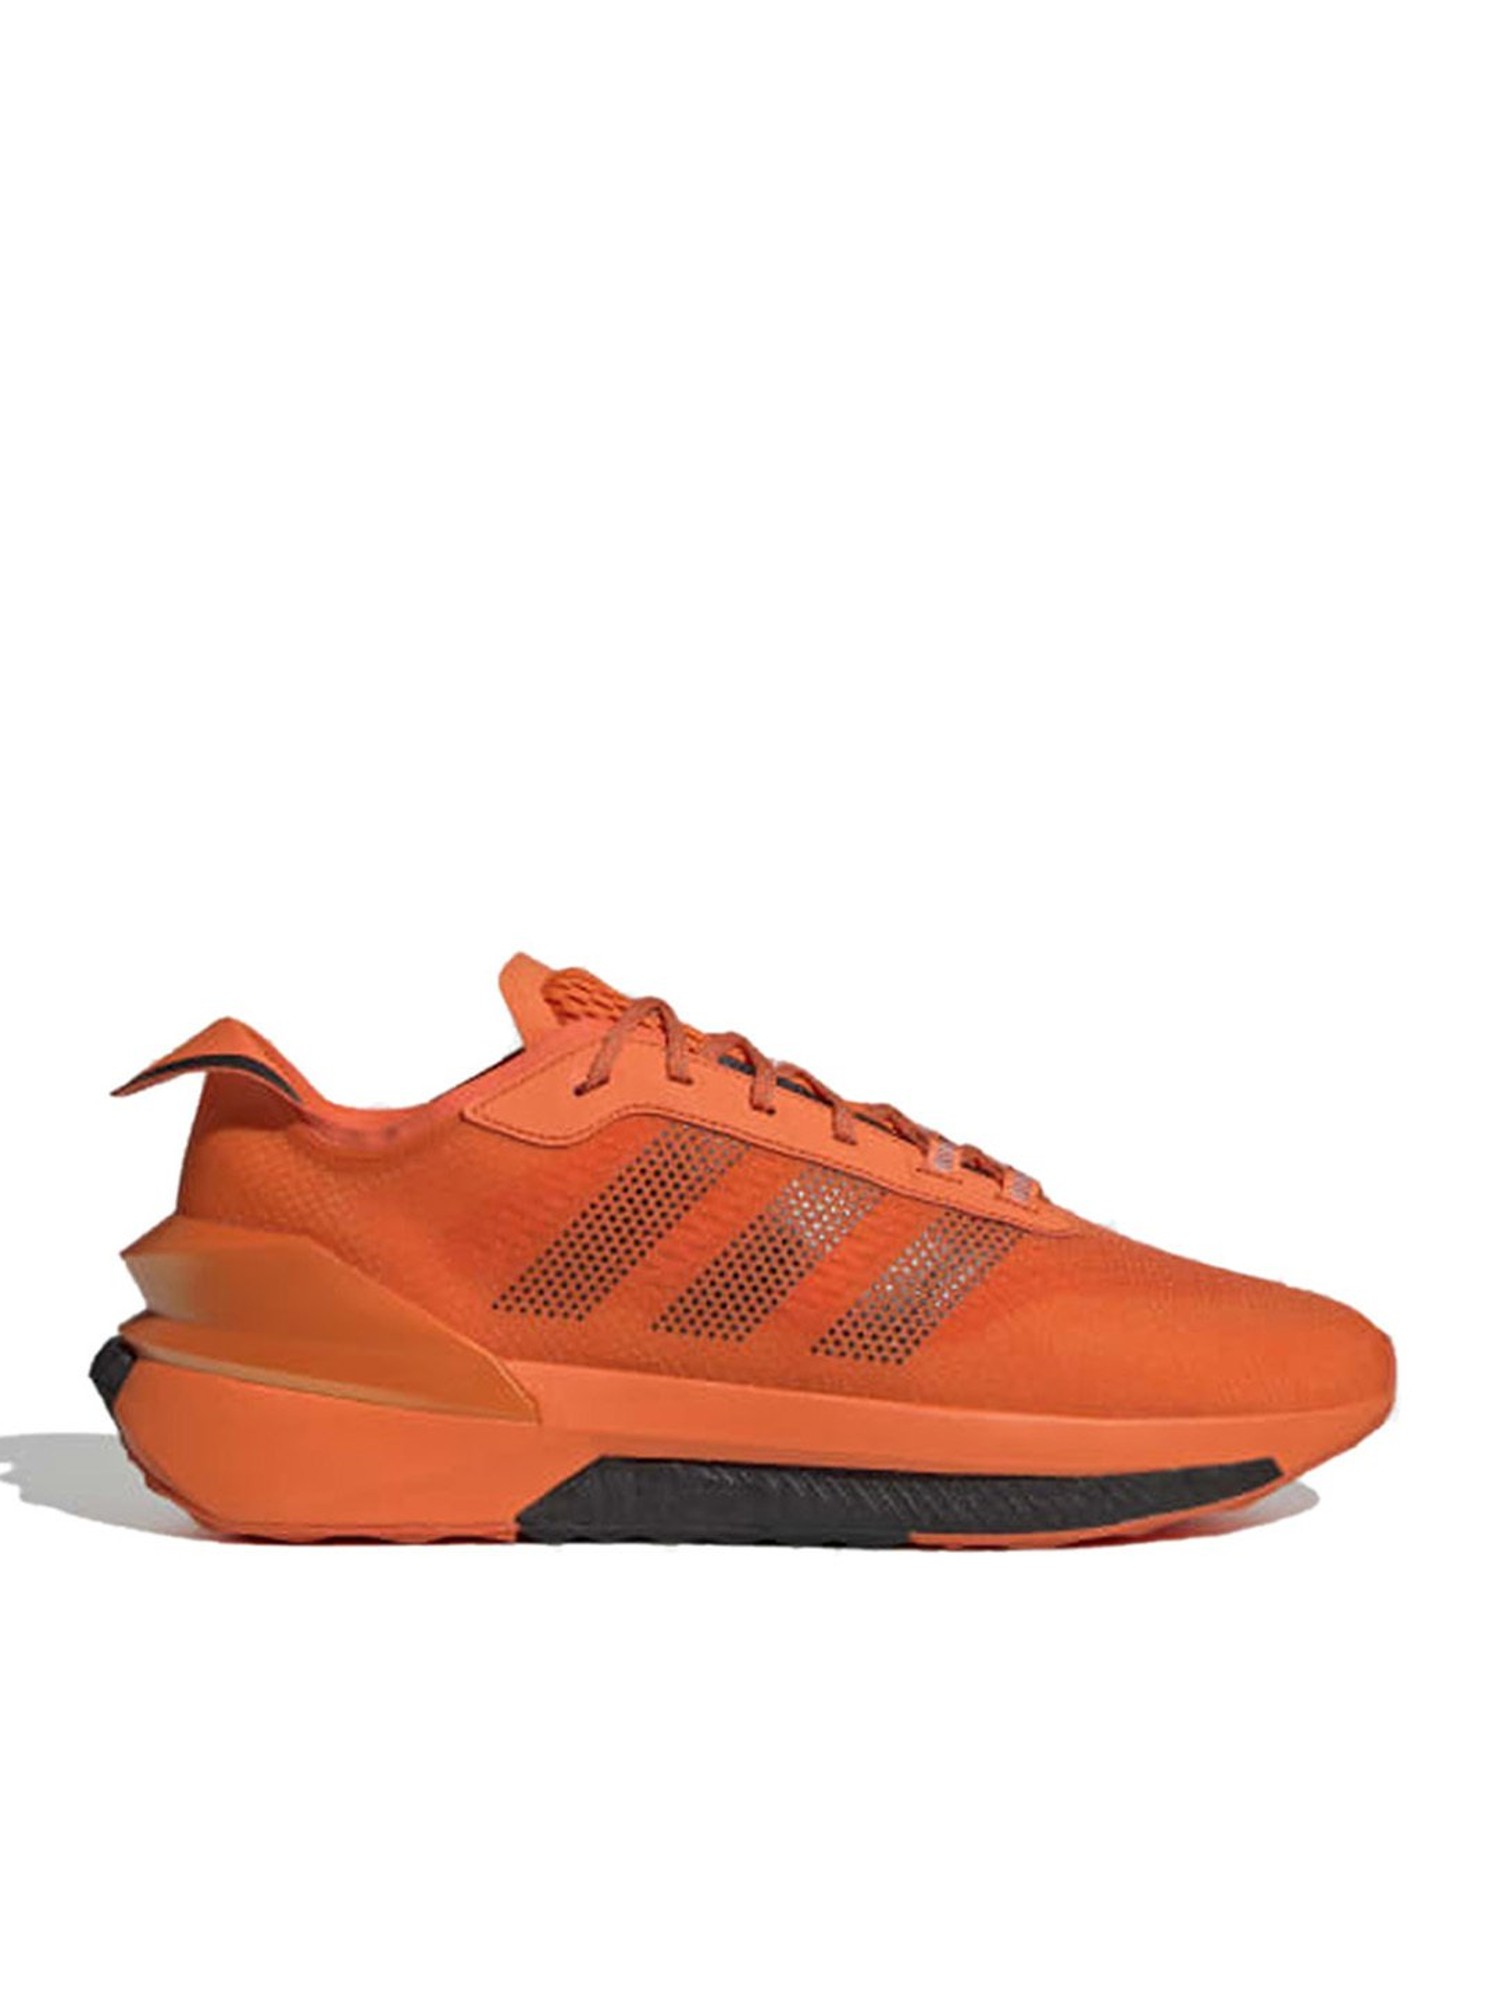 Men Casual Wear Adidas X 9000 4D Grey orange black running shoes at Rs  3500/pair in Surat